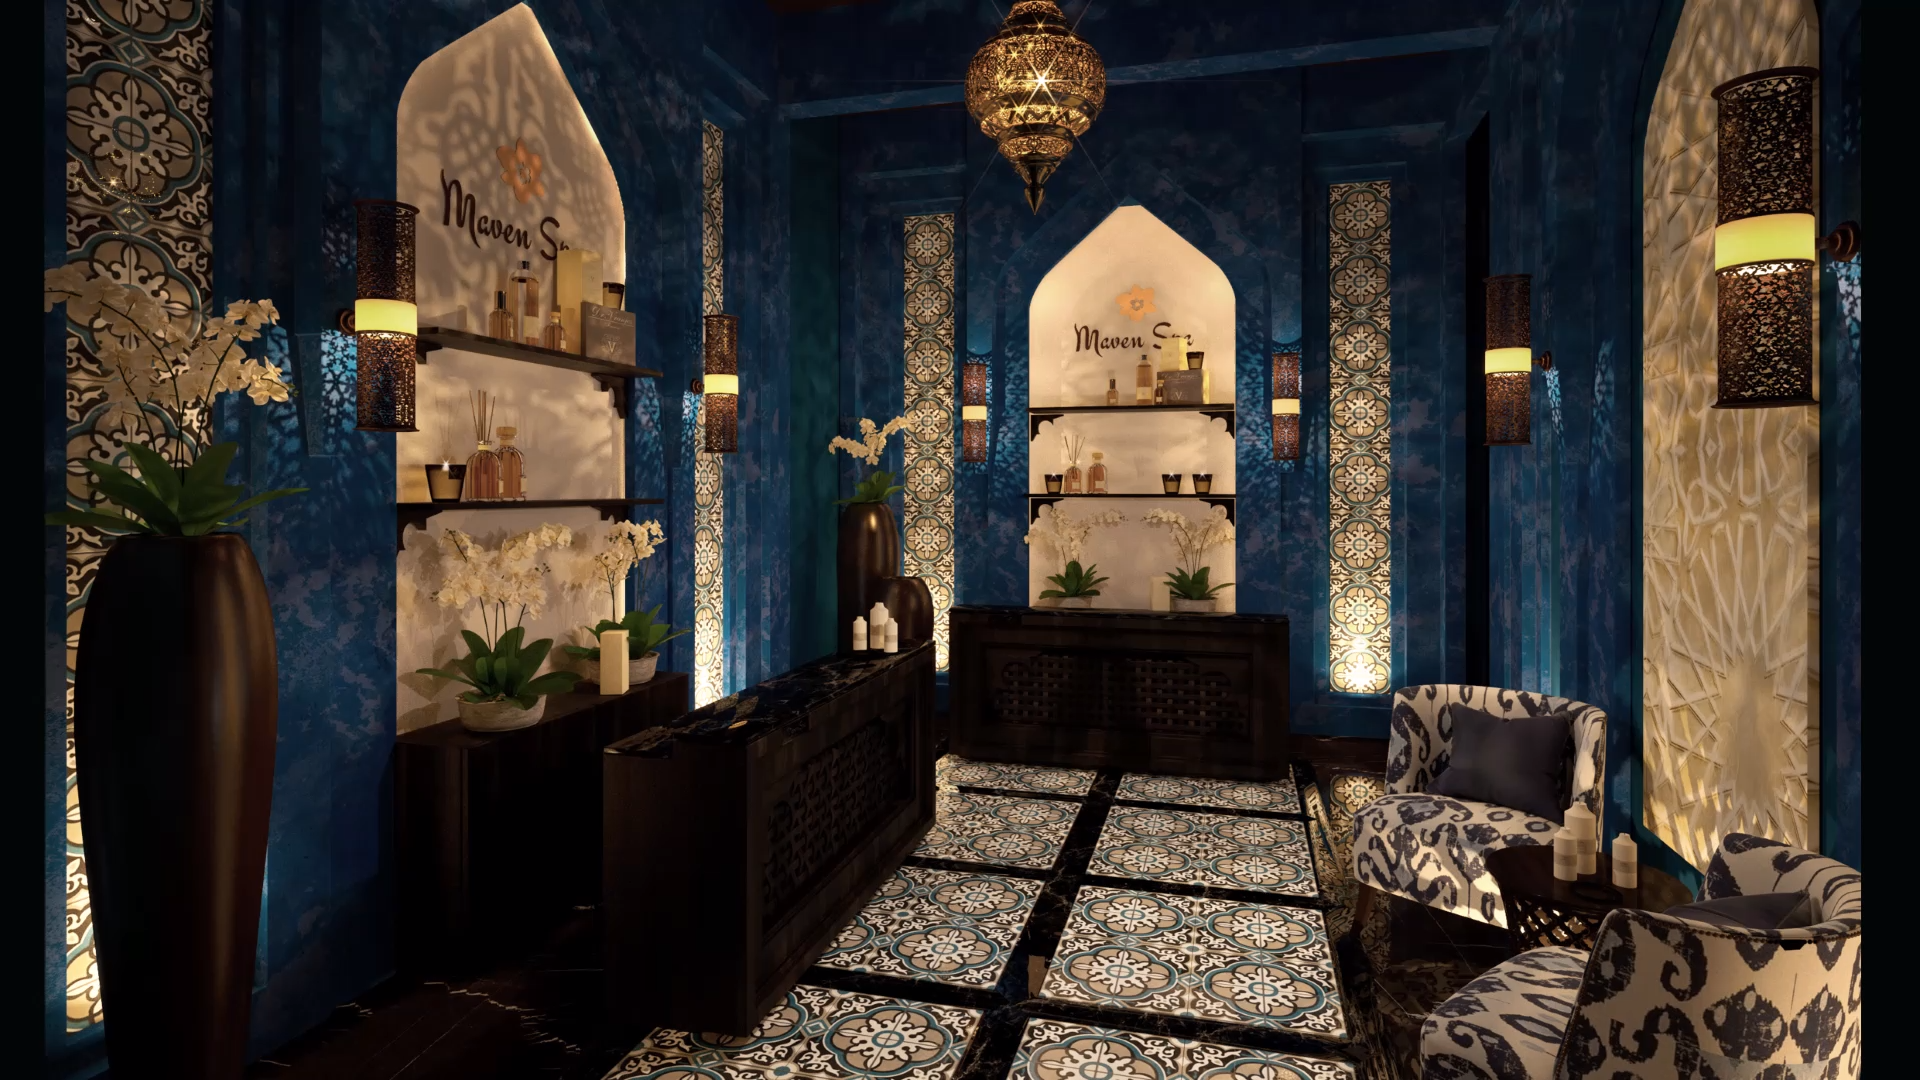 Arabic style beauty salon interior design with luxury decorations - Arabic style beauty salon interior design with luxury decorations -   19 beauty Spa interior ideas